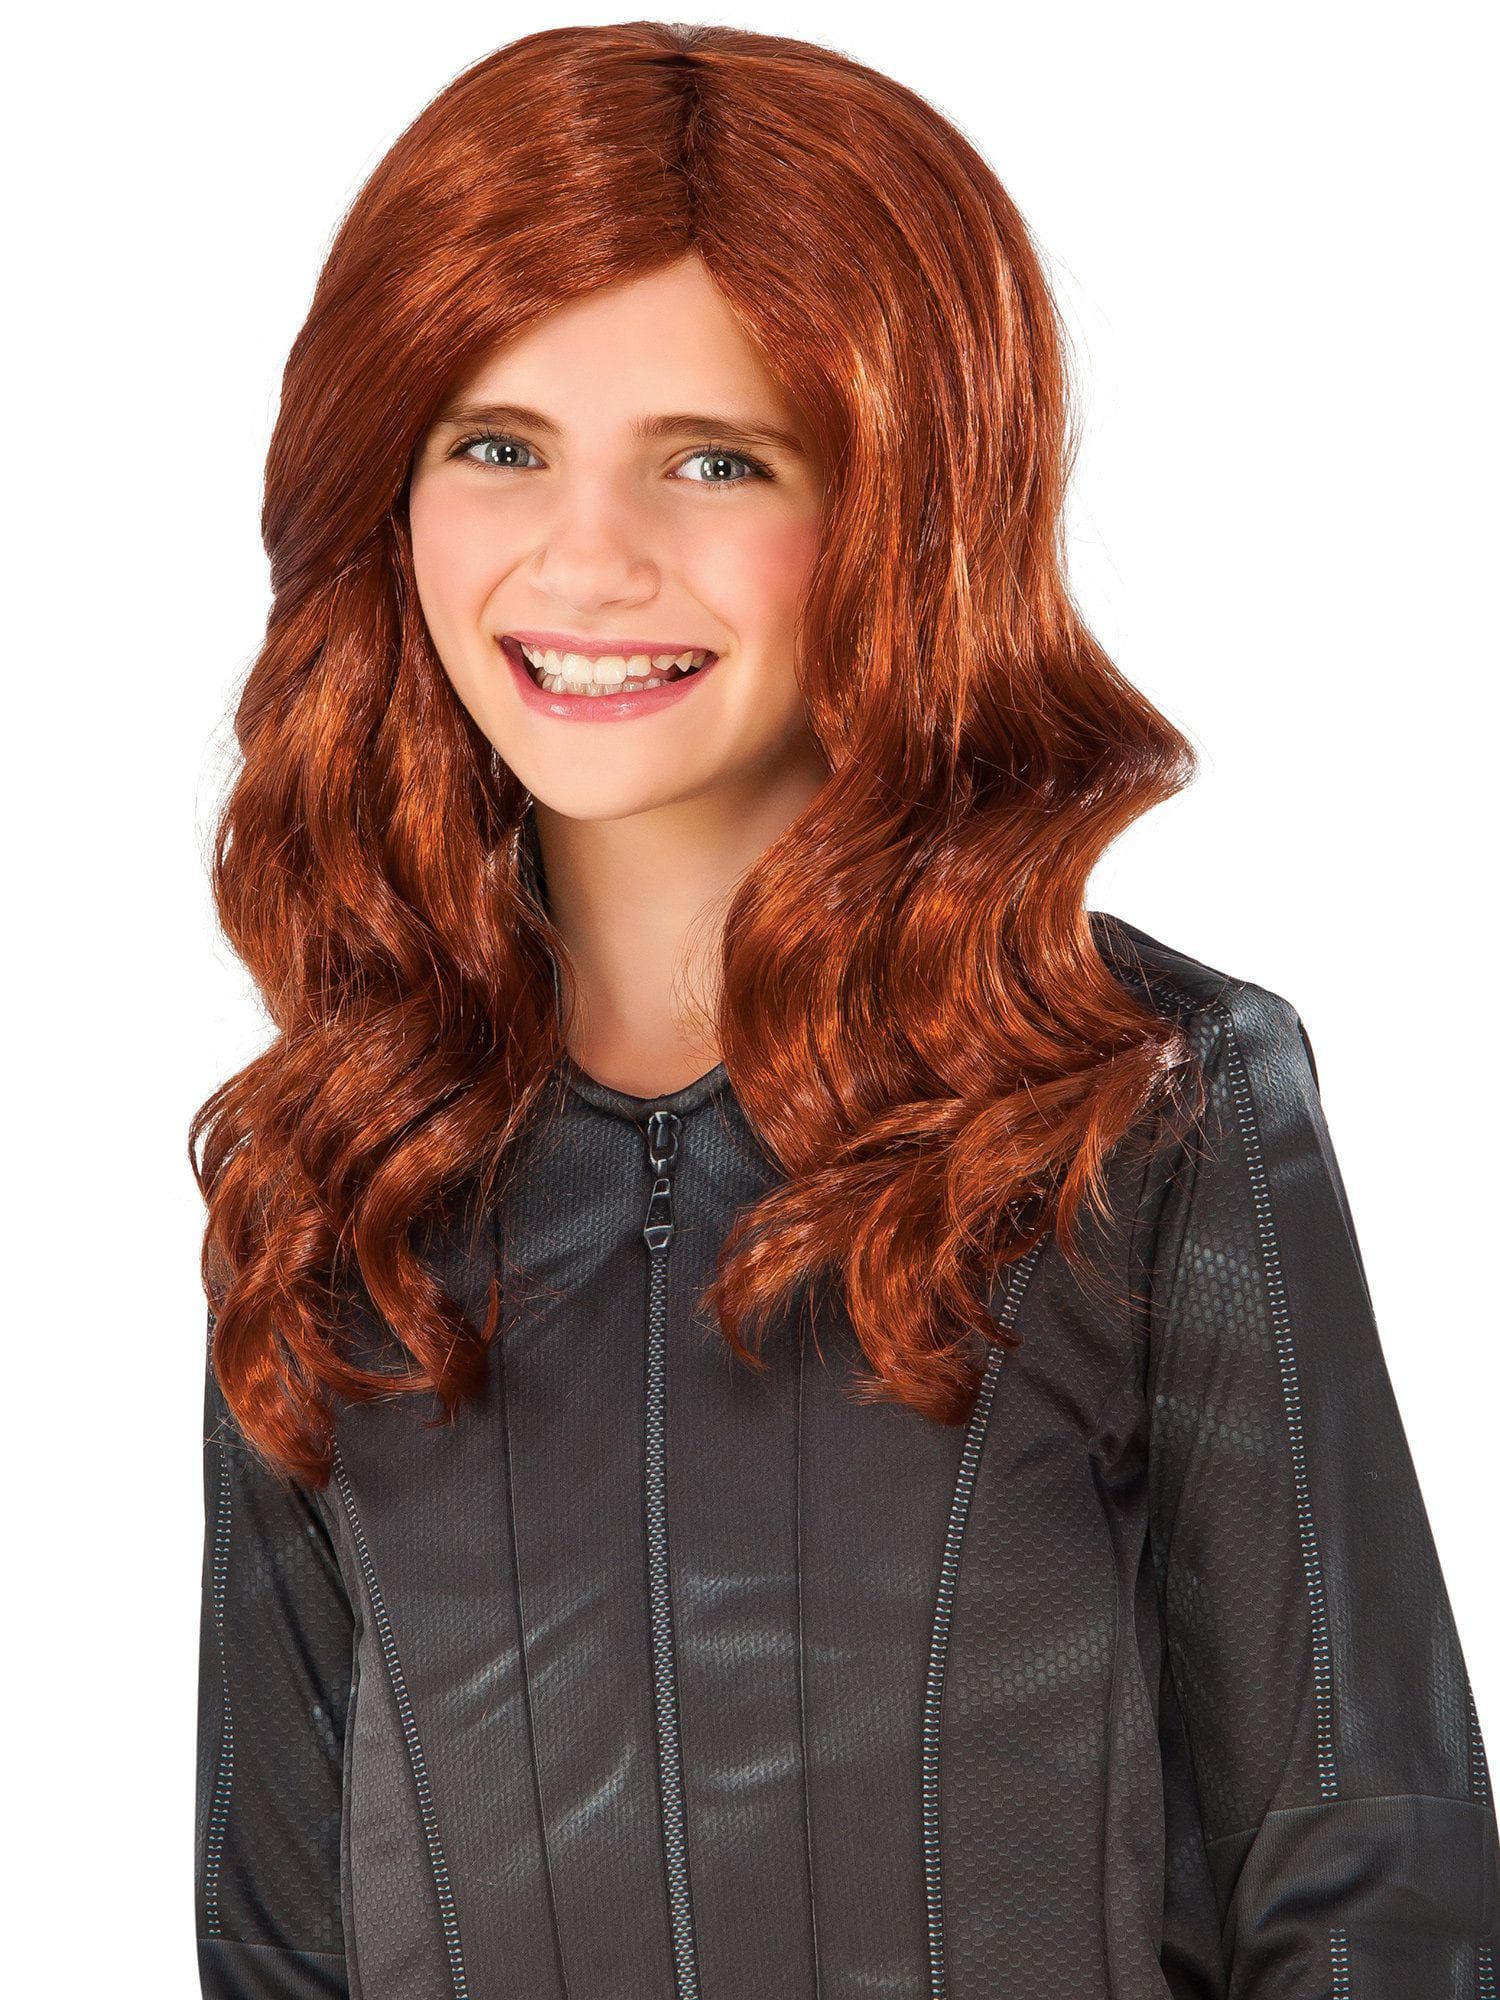 Girls' Captain America: Civil War Black Widow Wig - costumes.com